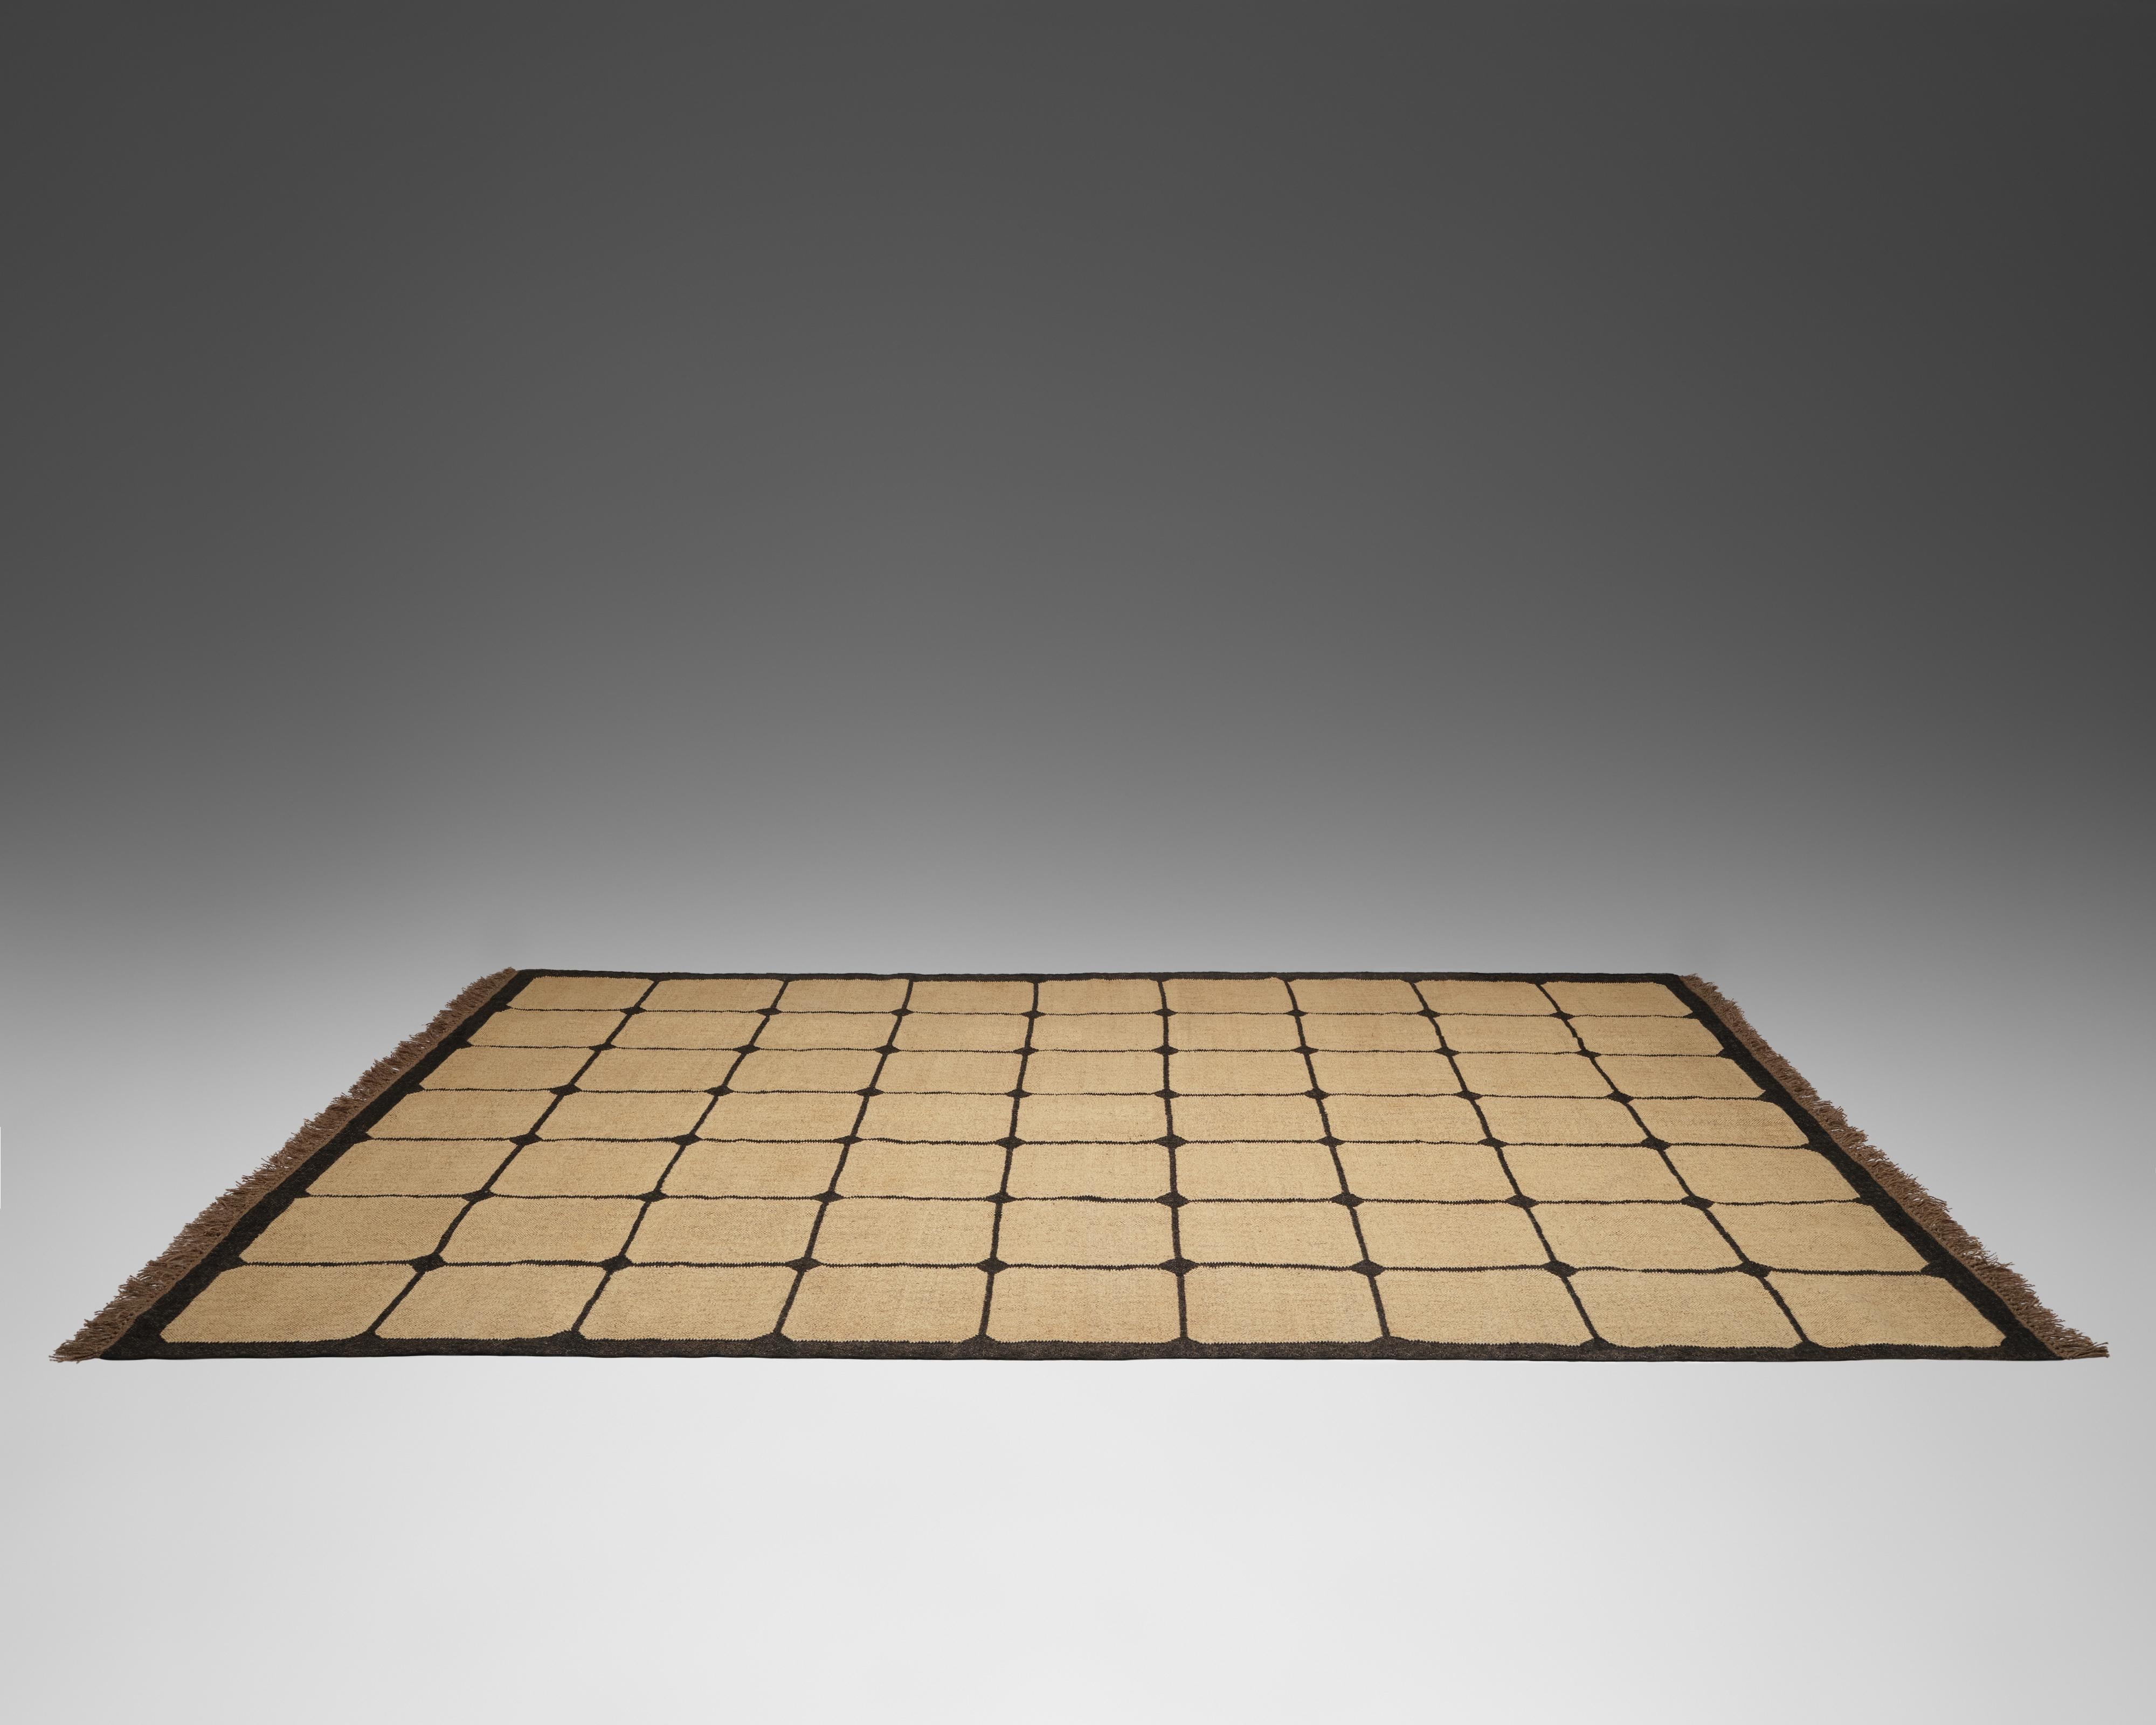 9x12 tile patterns